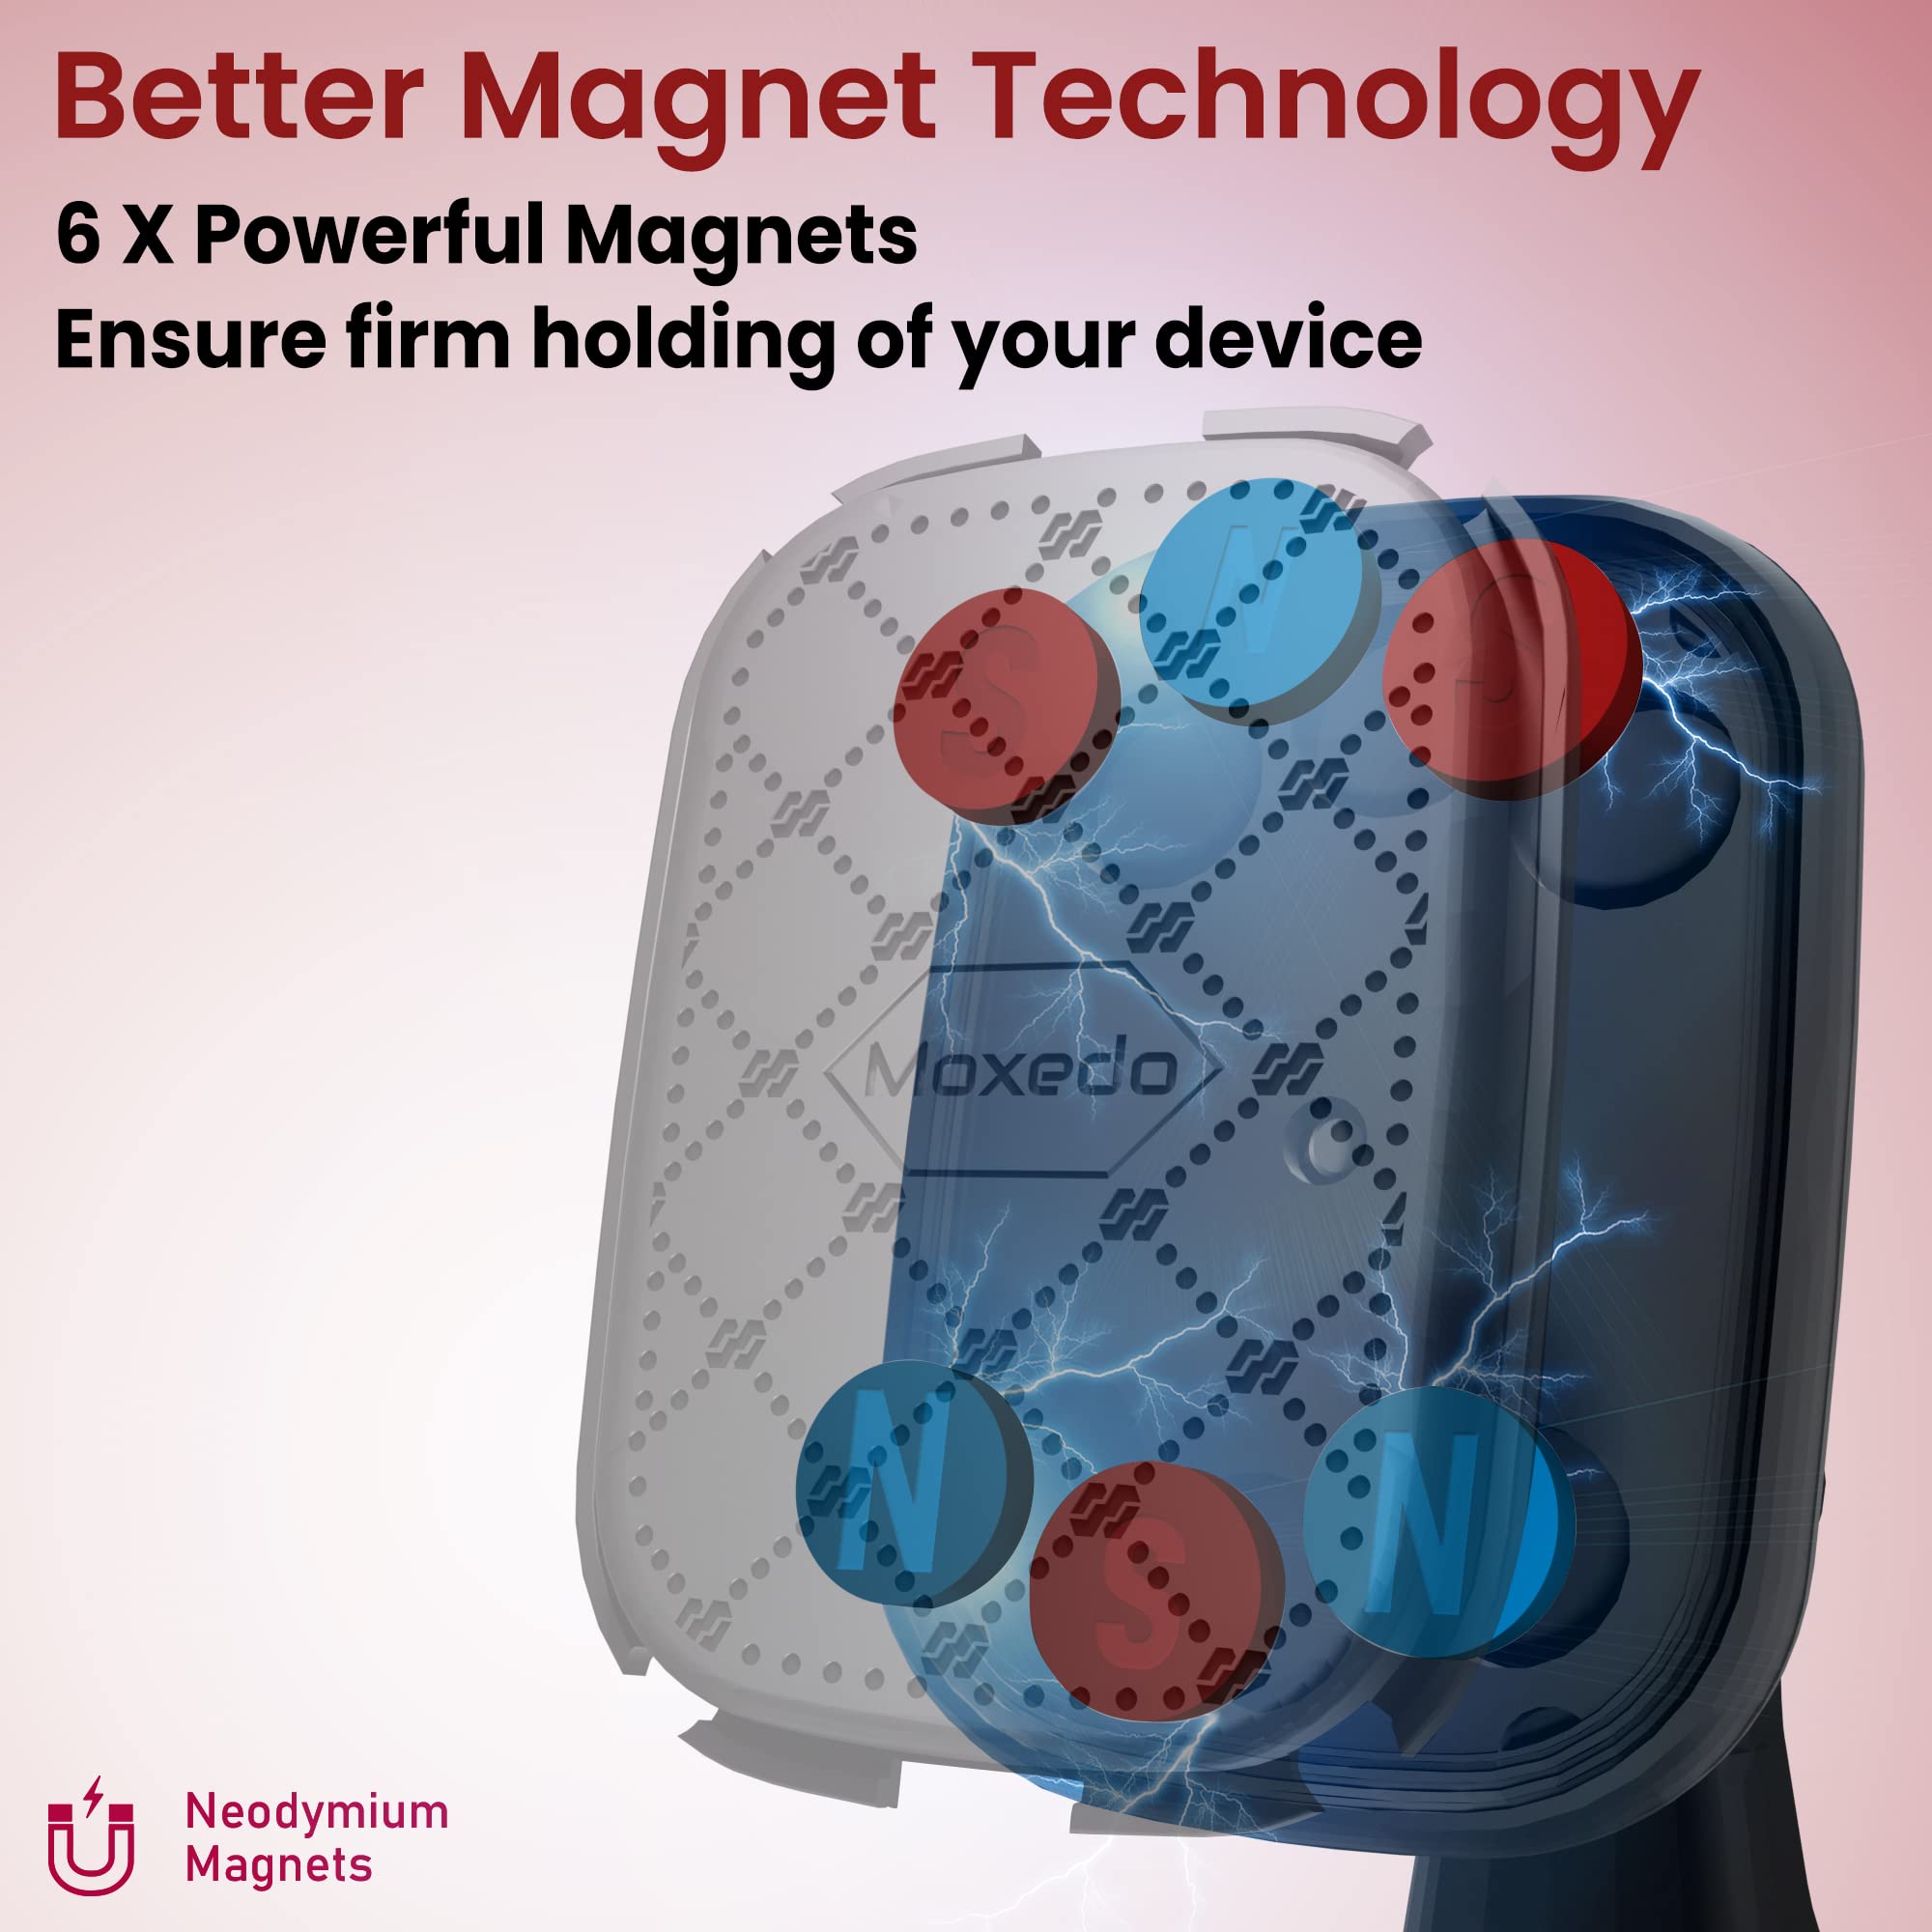 Moxedo Magnetic Car Mount Dashboard Phone Holder Suction Base Adjustable 360 Degree Rotation